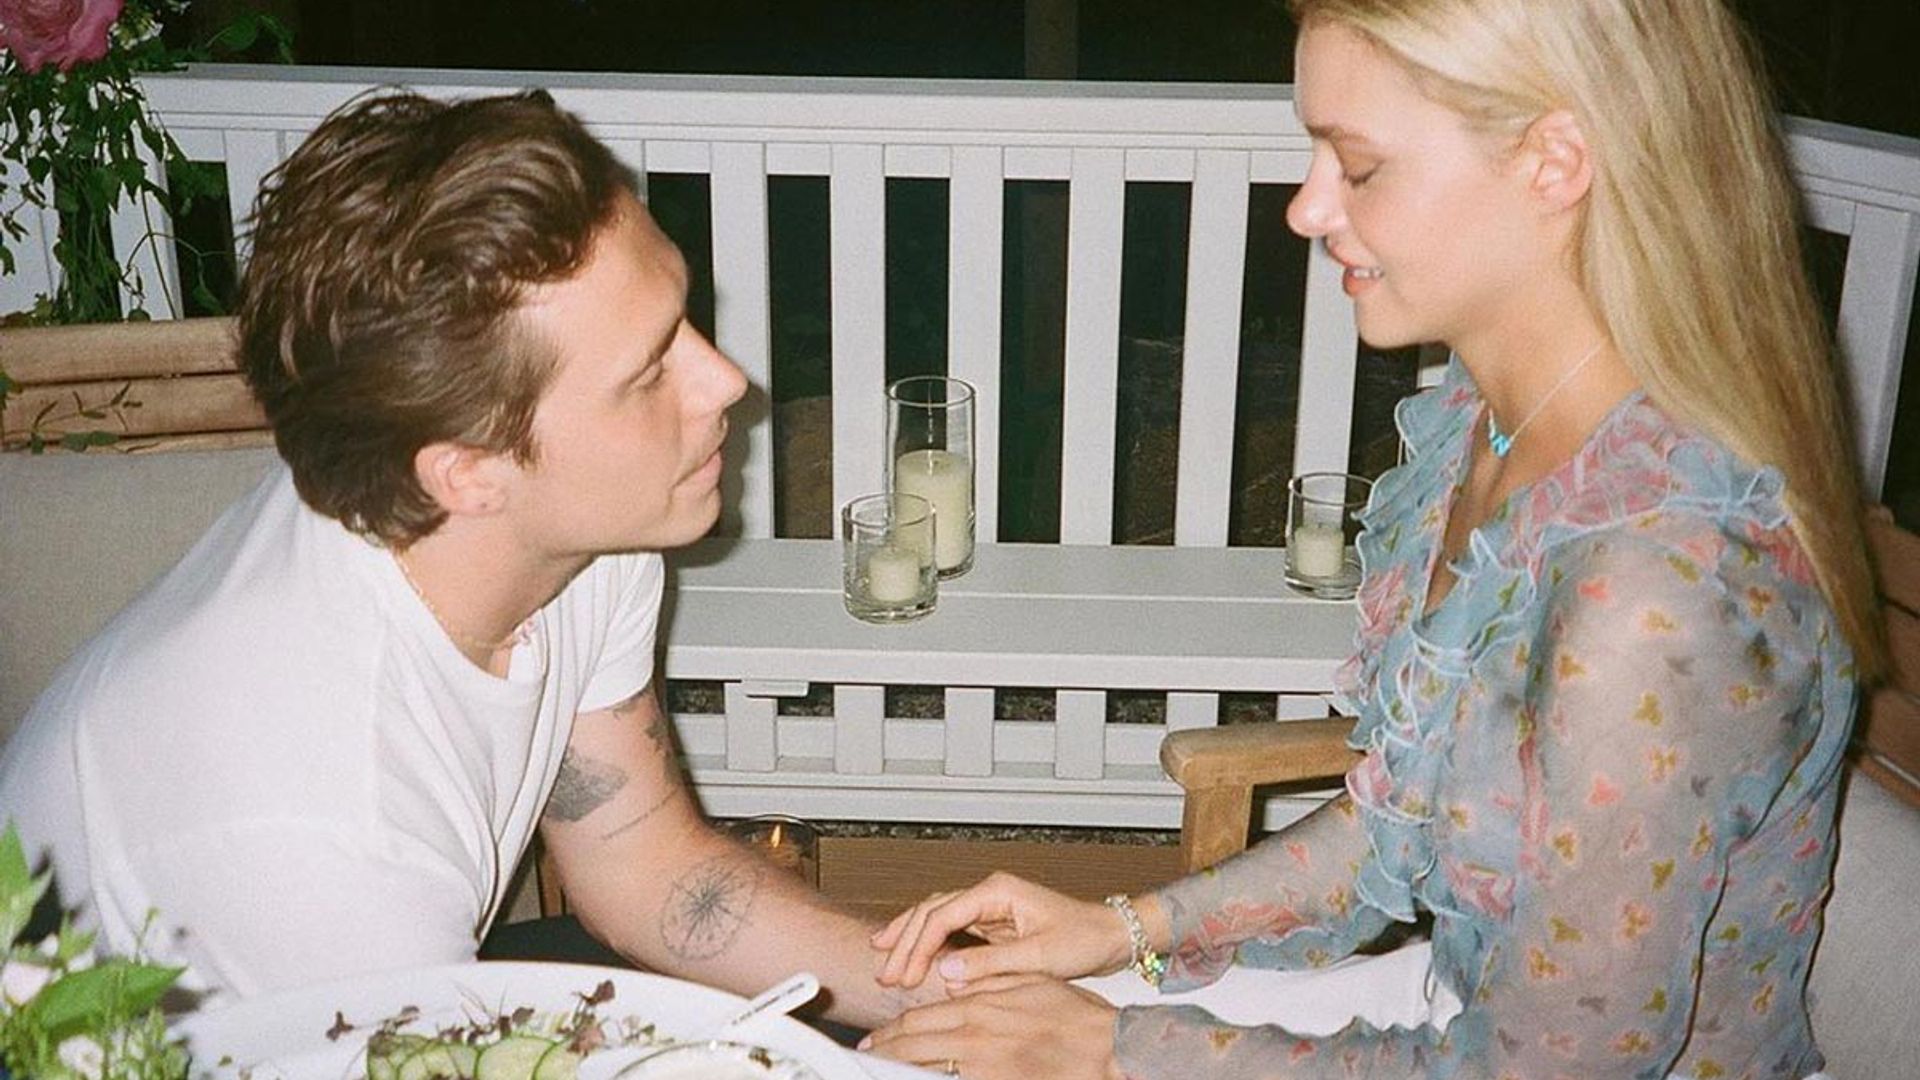 Brooklyn Beckham's romantic dinner for fiancée Nicola Peltz will leave you baffled